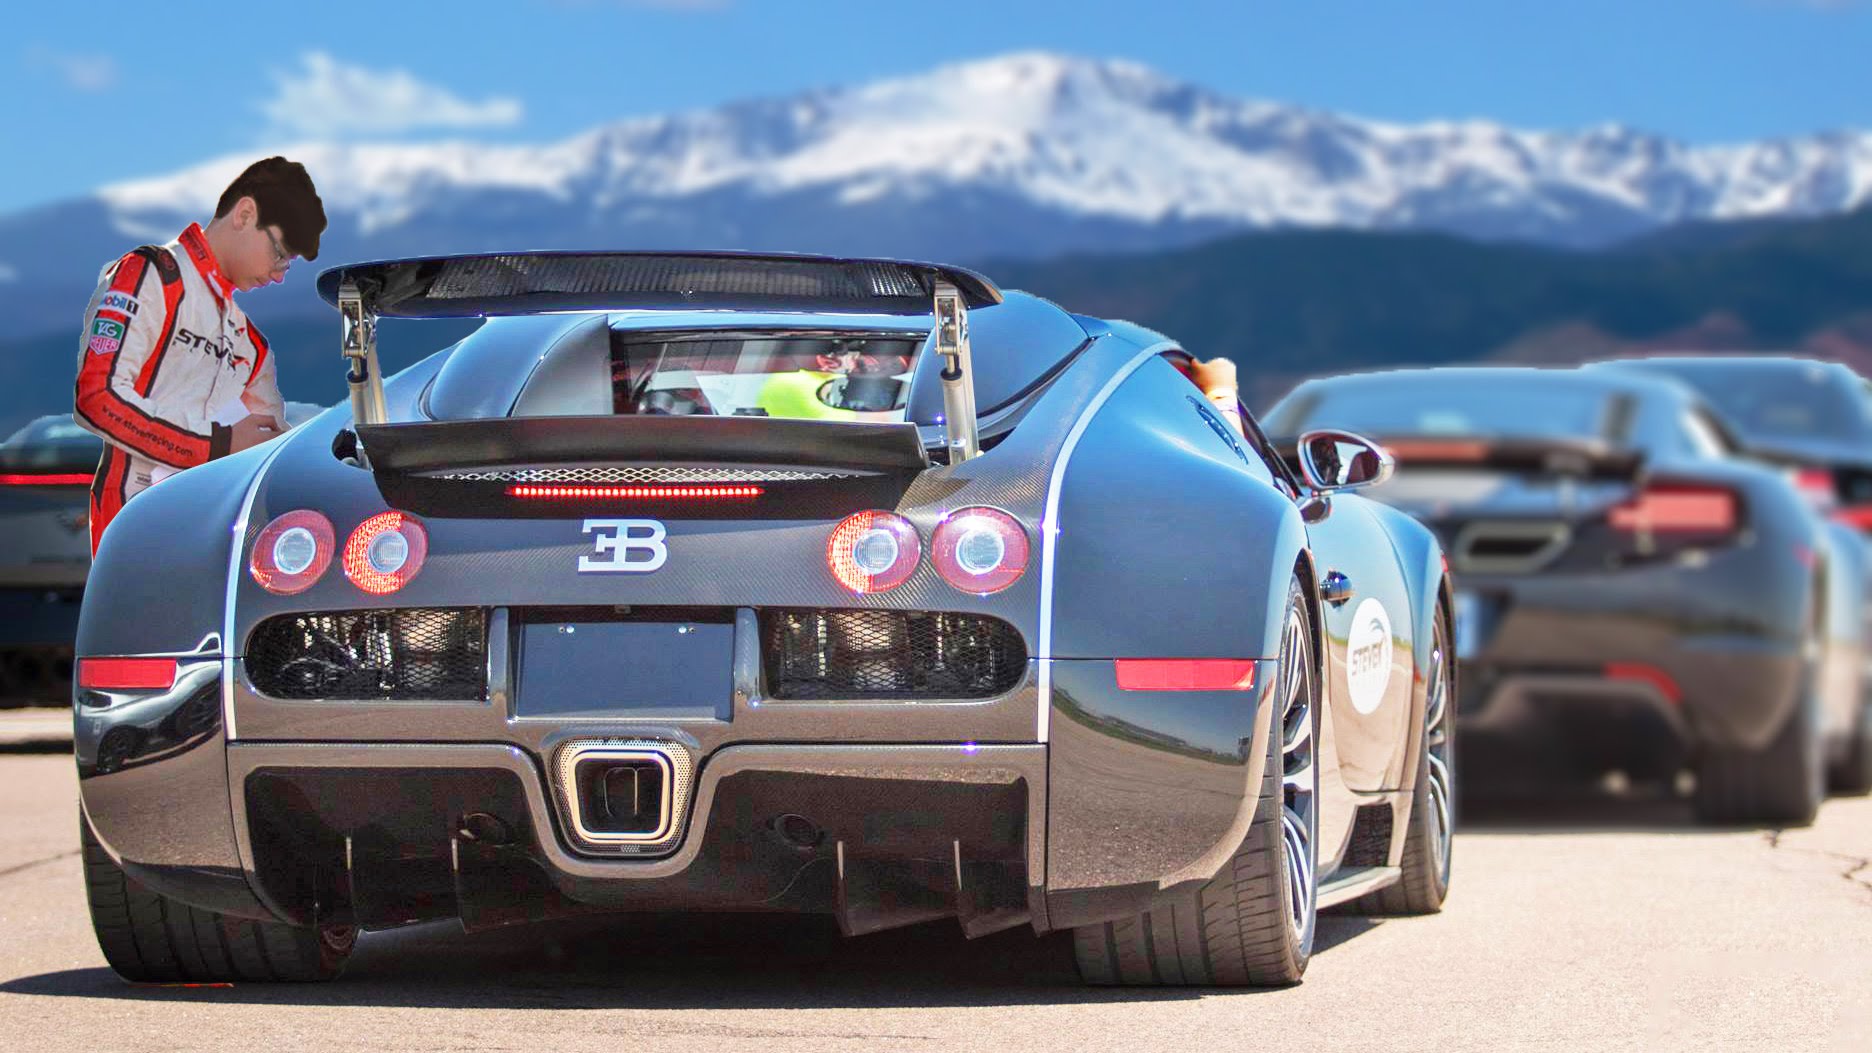 13 YEAR OLD Drives 200 MPH in Bugatti Veyron! (Steven Racing) - YouTube